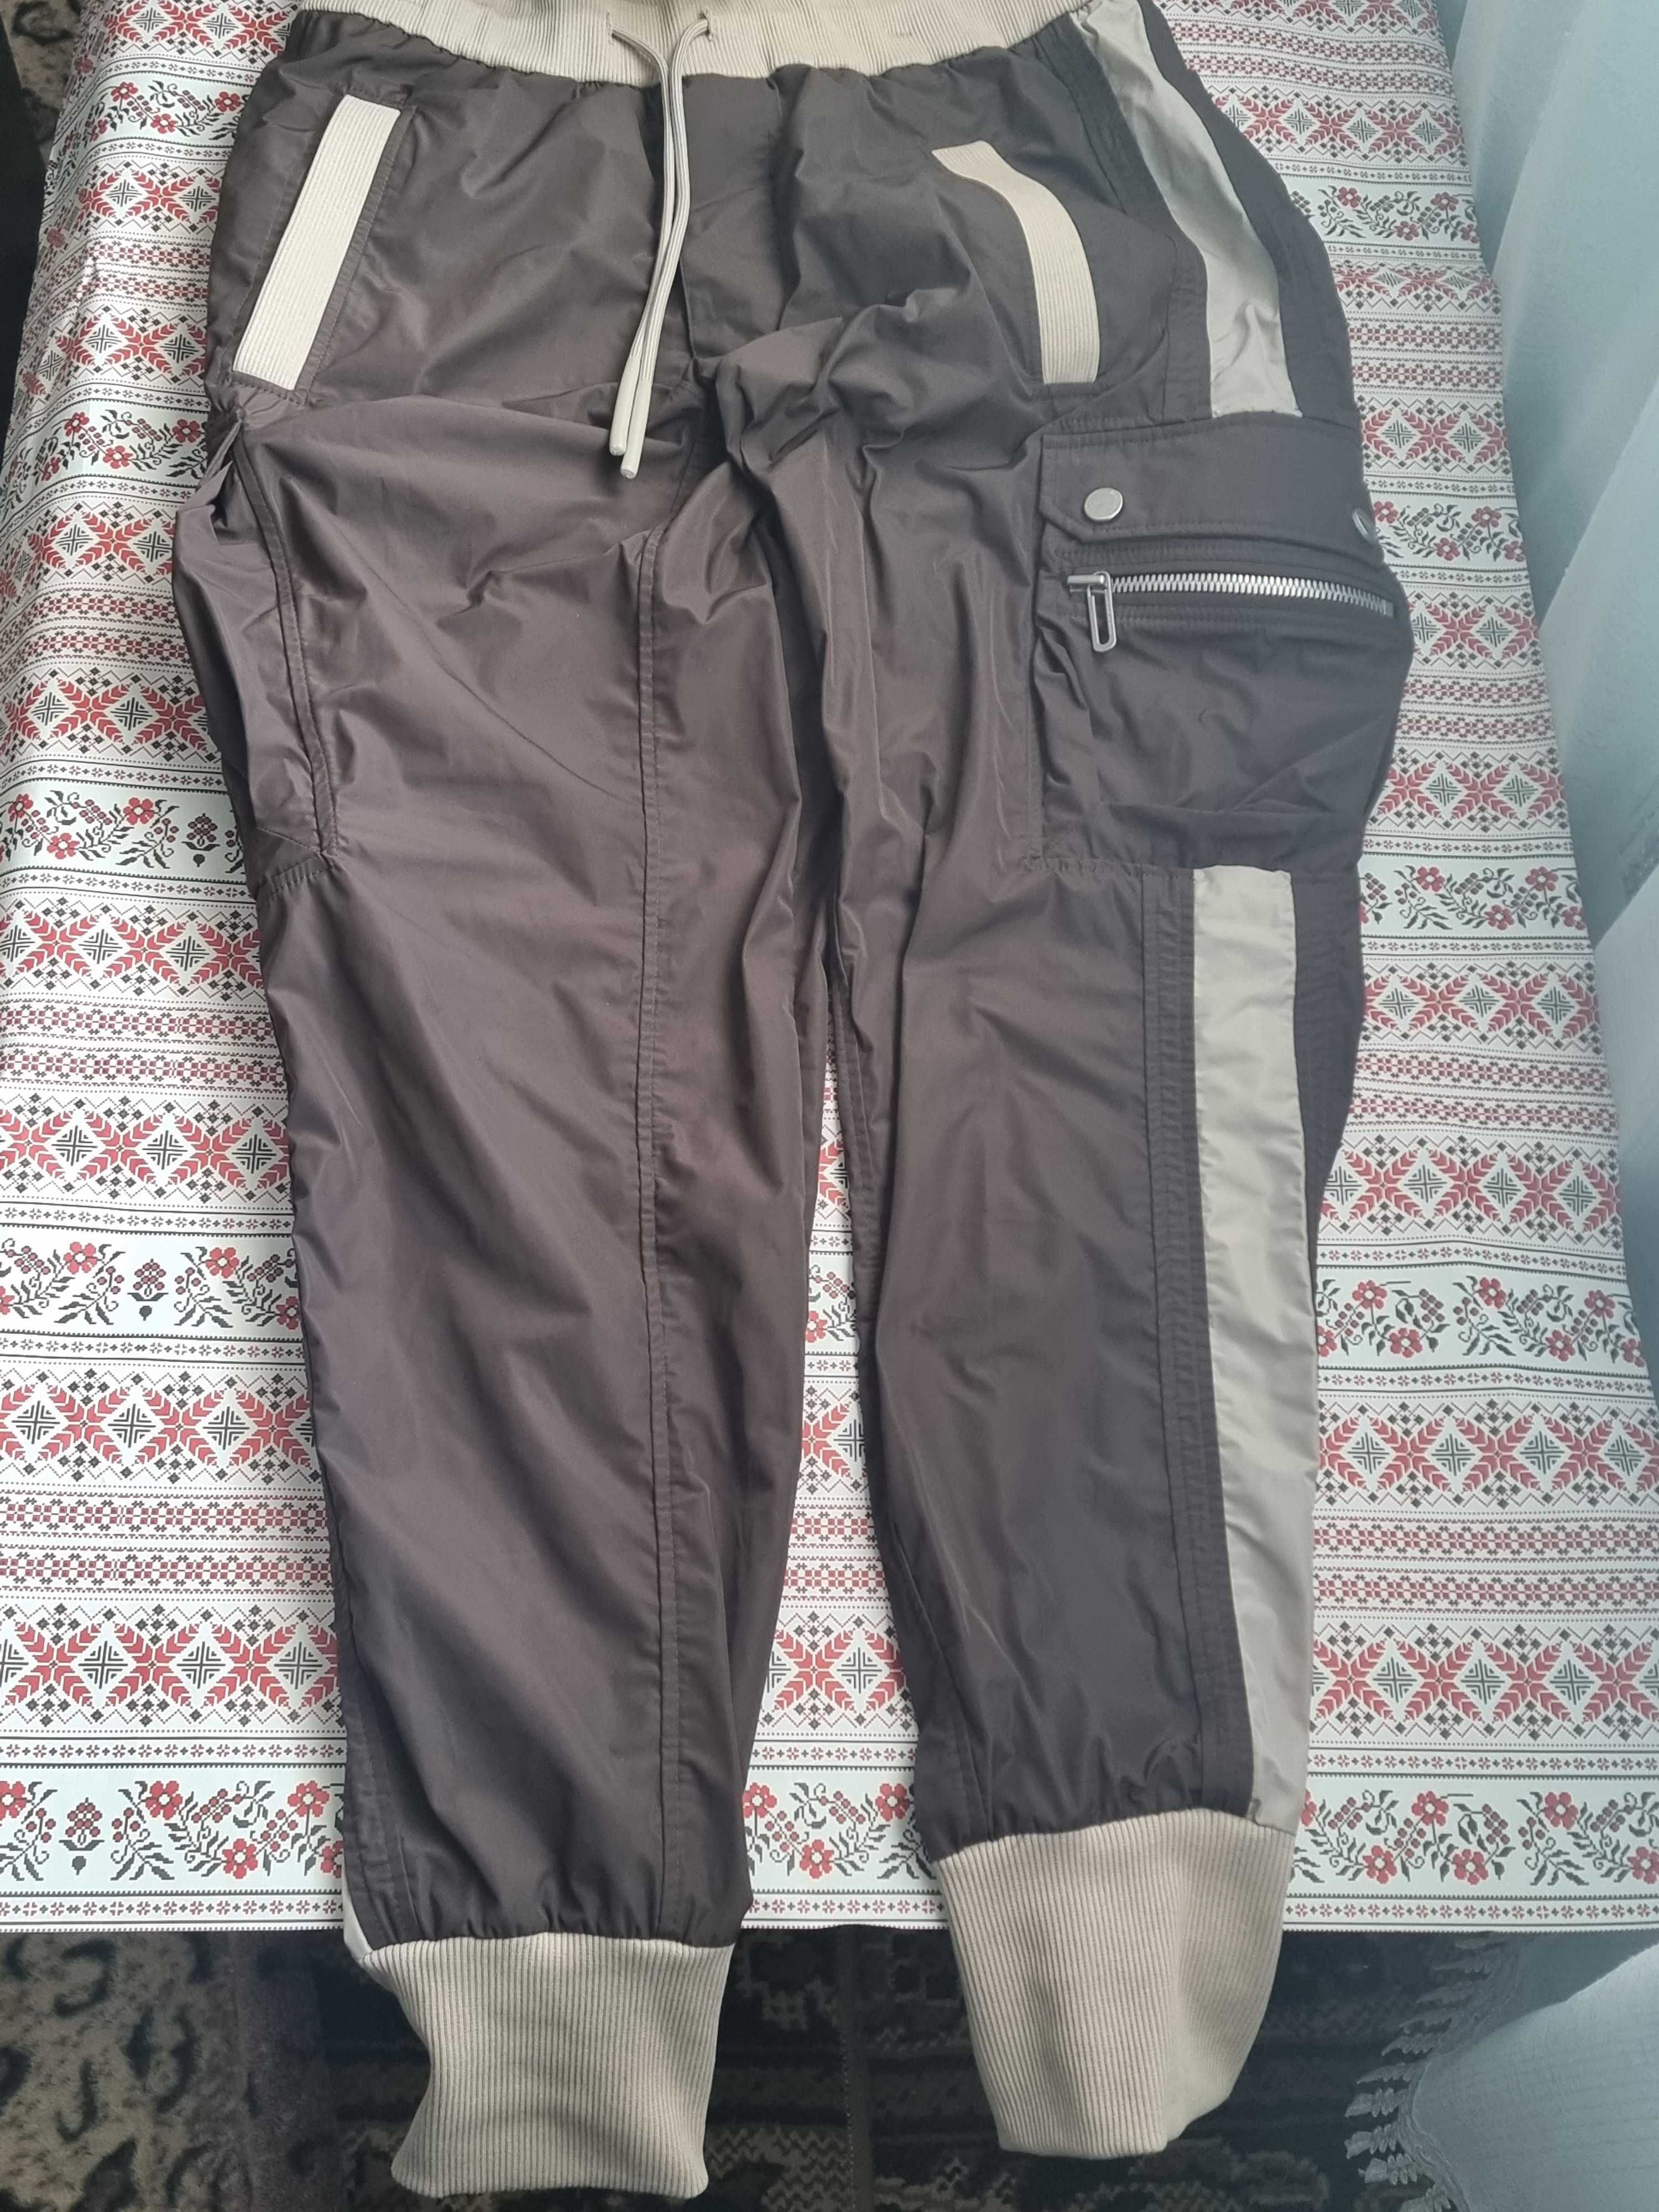 Pantalon - Made in Romania